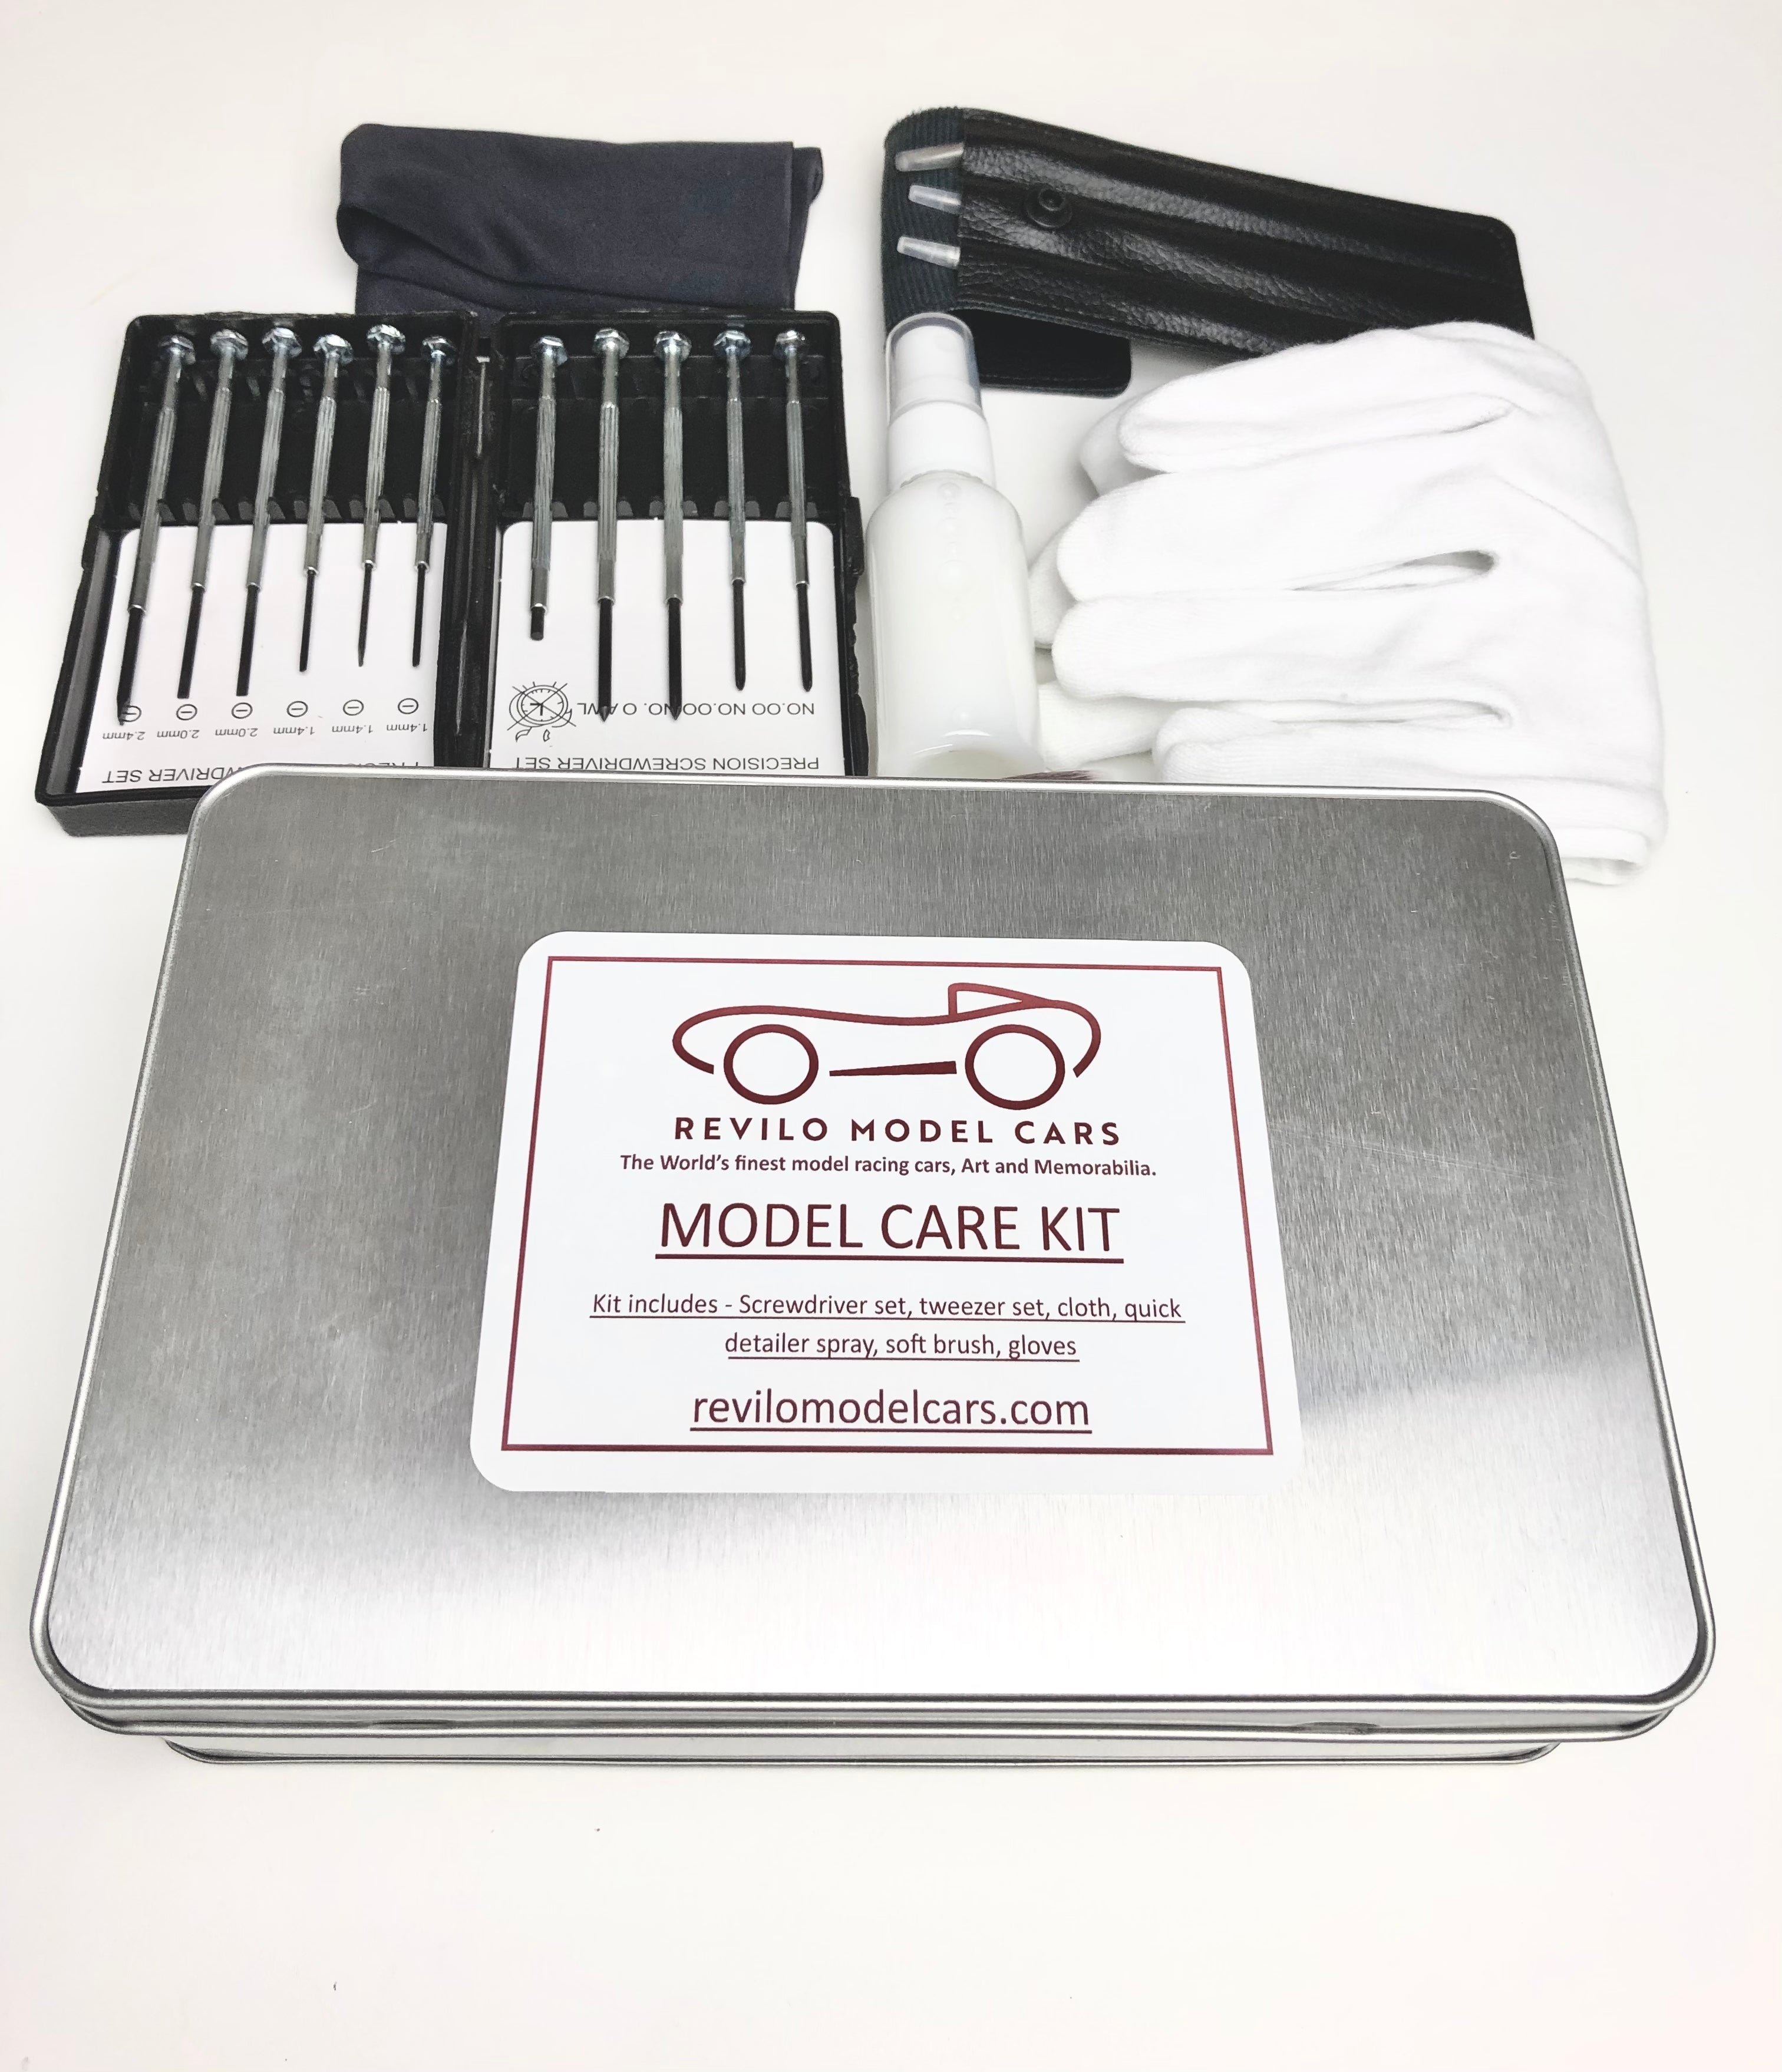 Model Care Kit - Perfect Christmas present